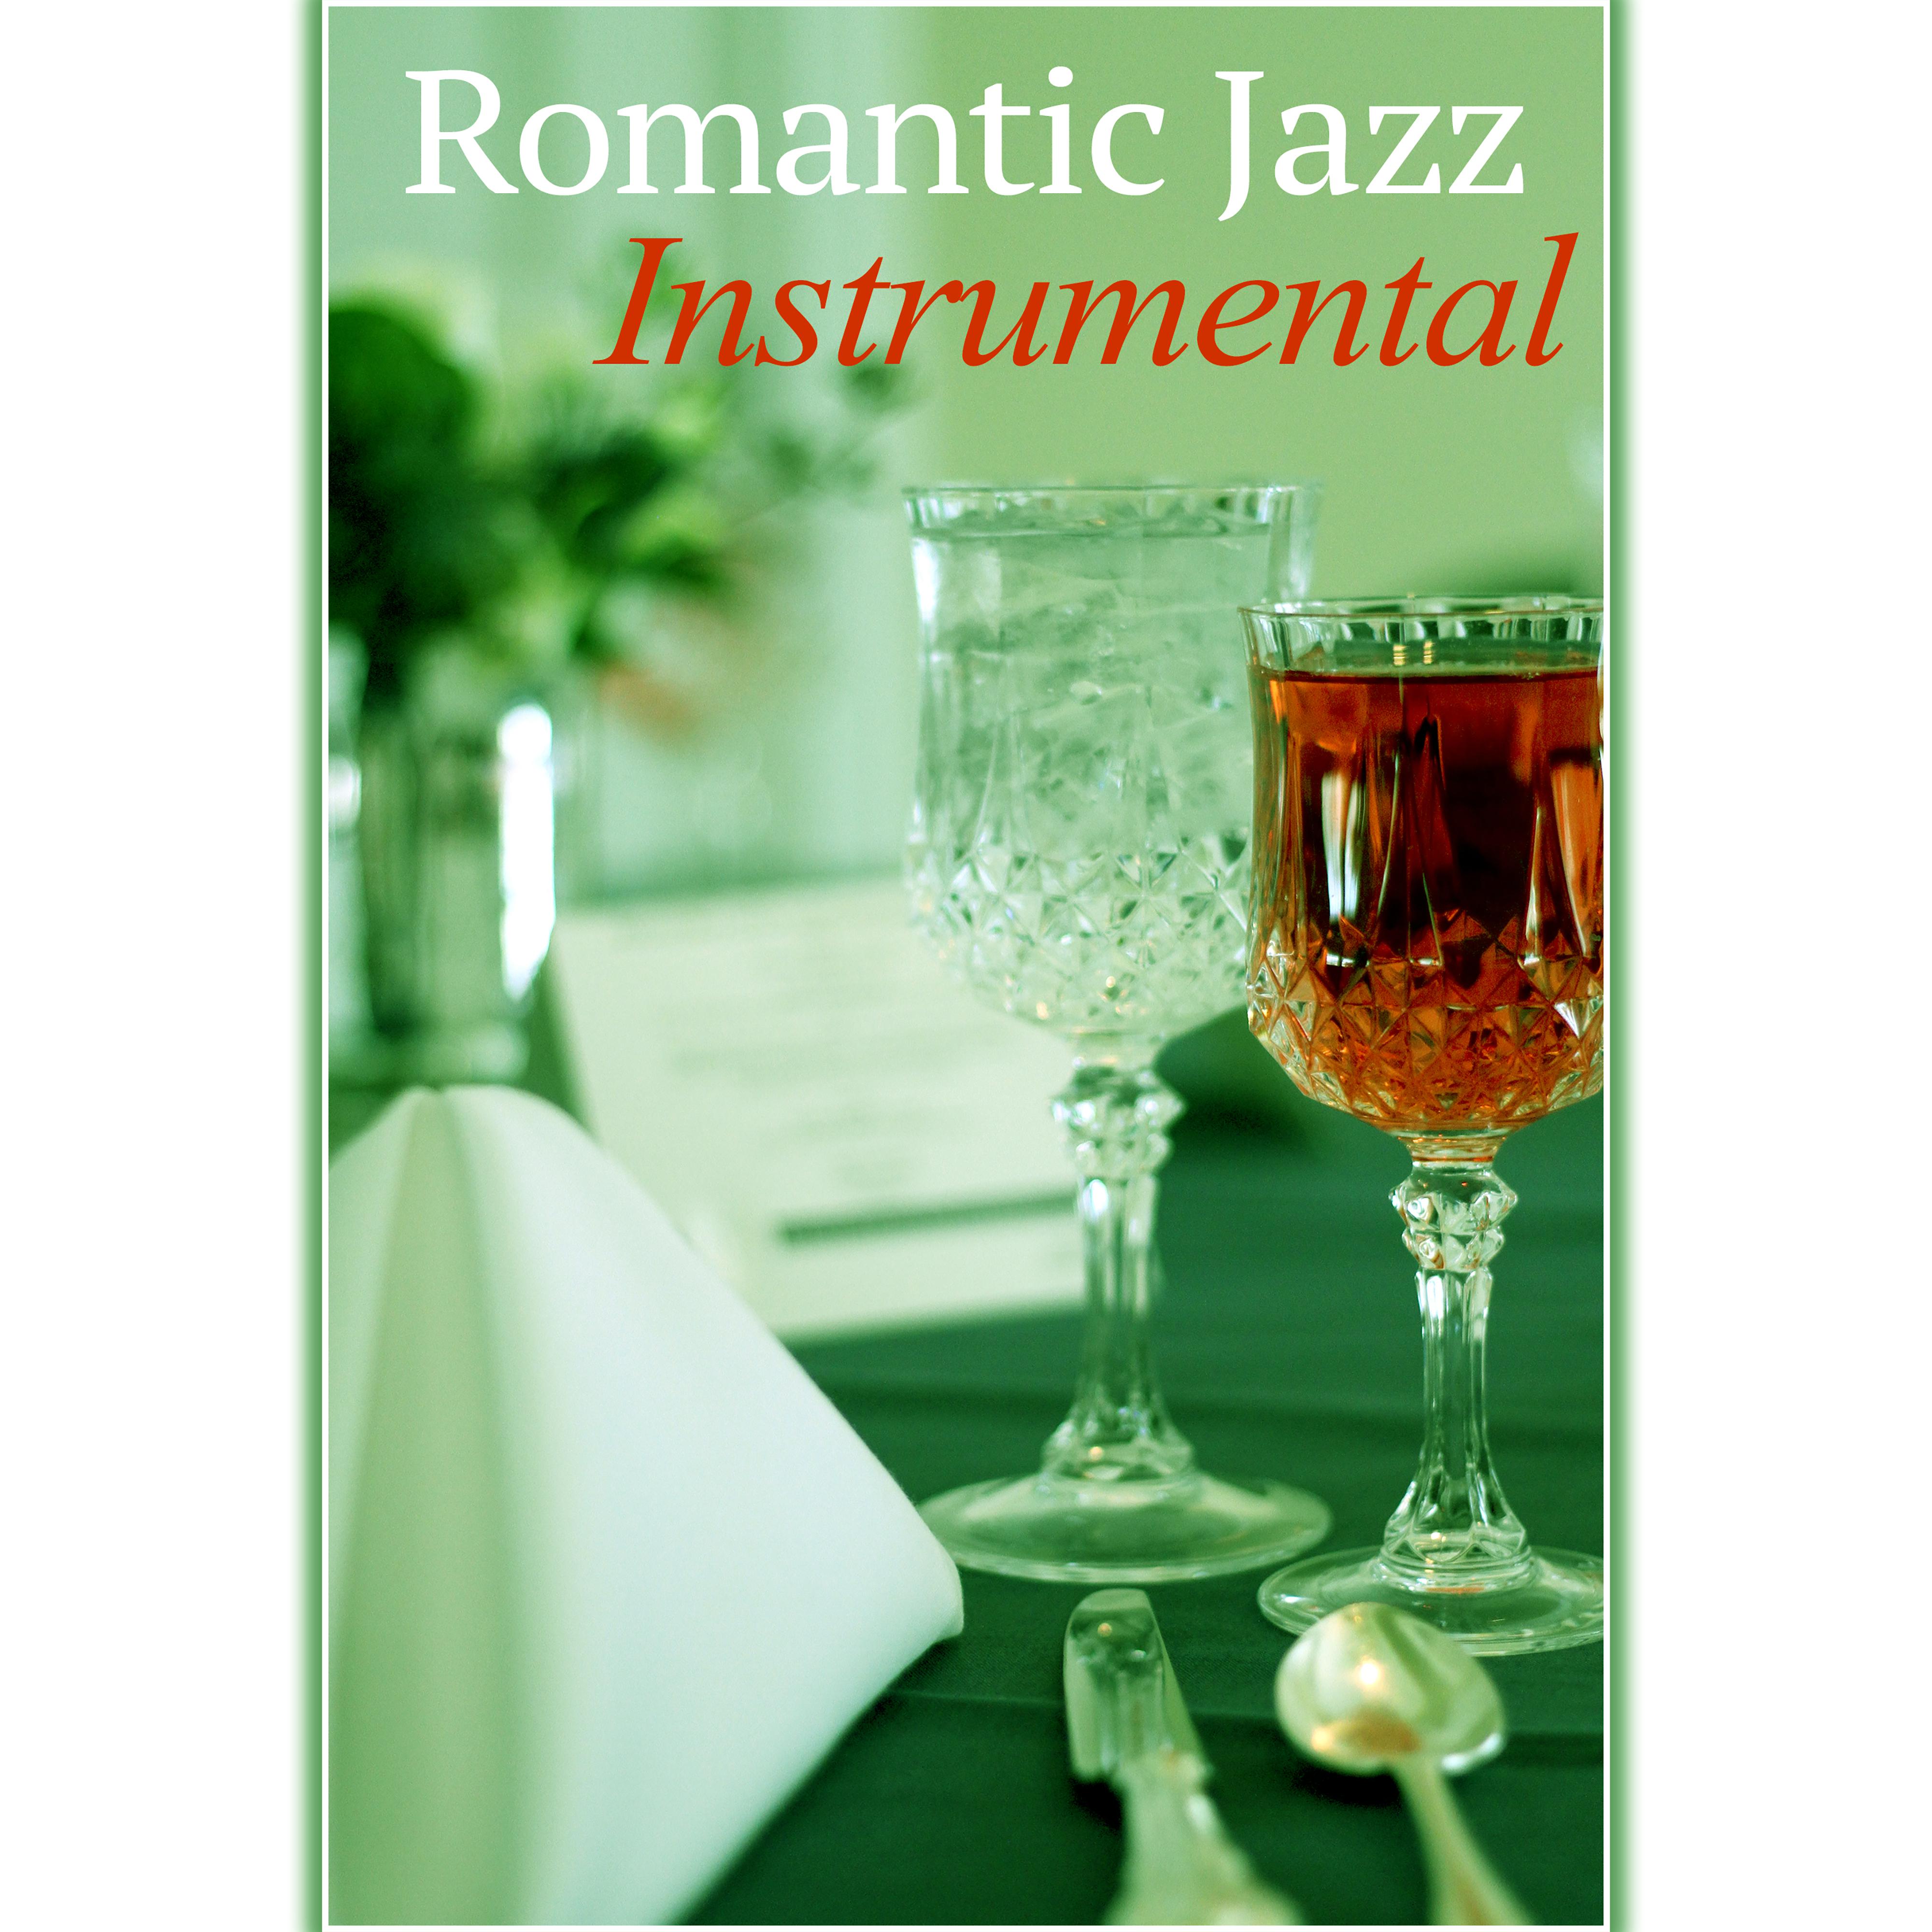 Romantic Jazz Instrumental  Sensual Jazz Music, Music for Erotic Massage, Romantic Music, Saxophone in the Background